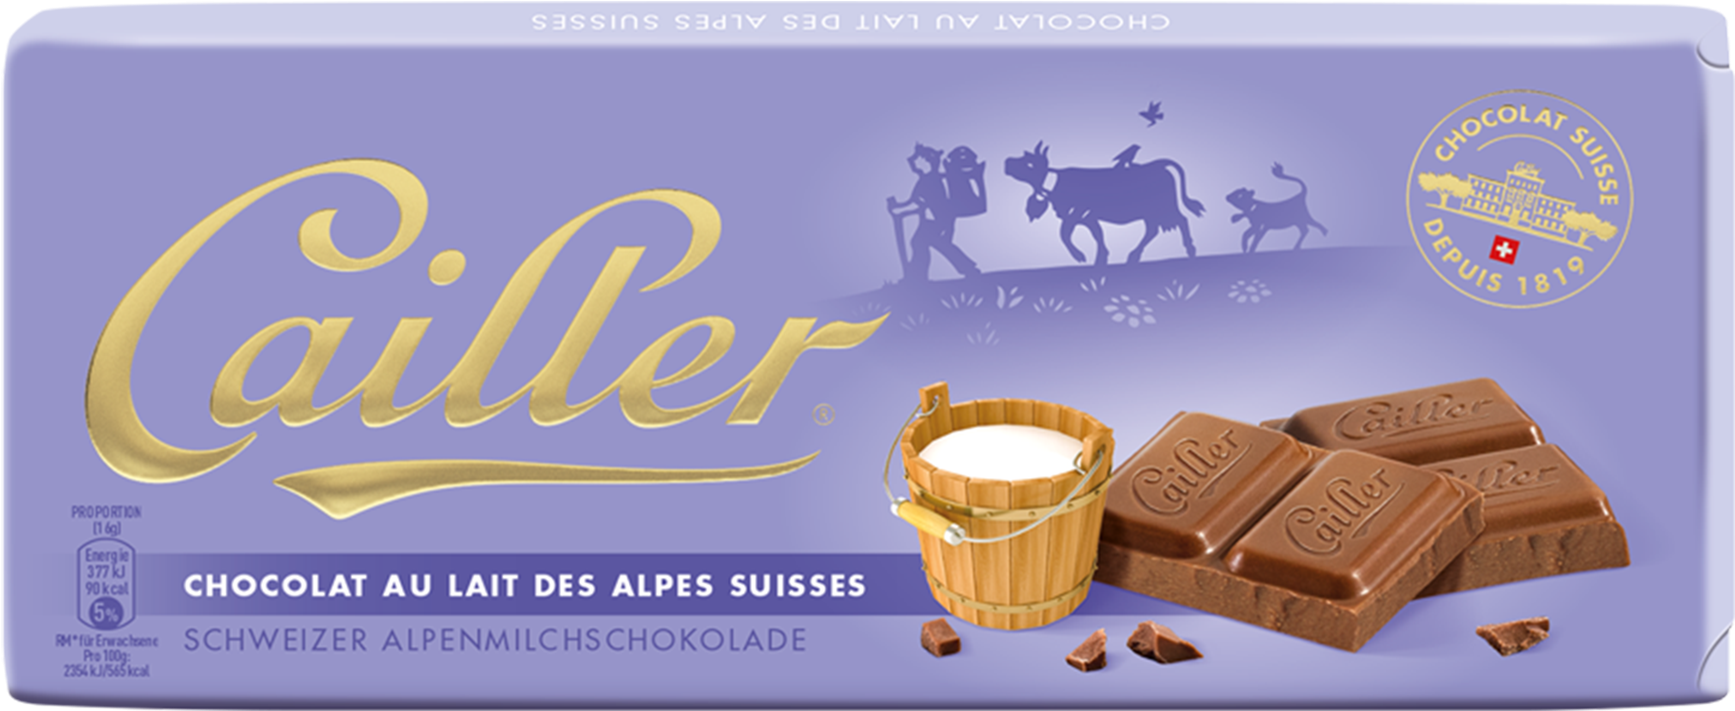 Swiss Cailler Milk Chocolate Packaging